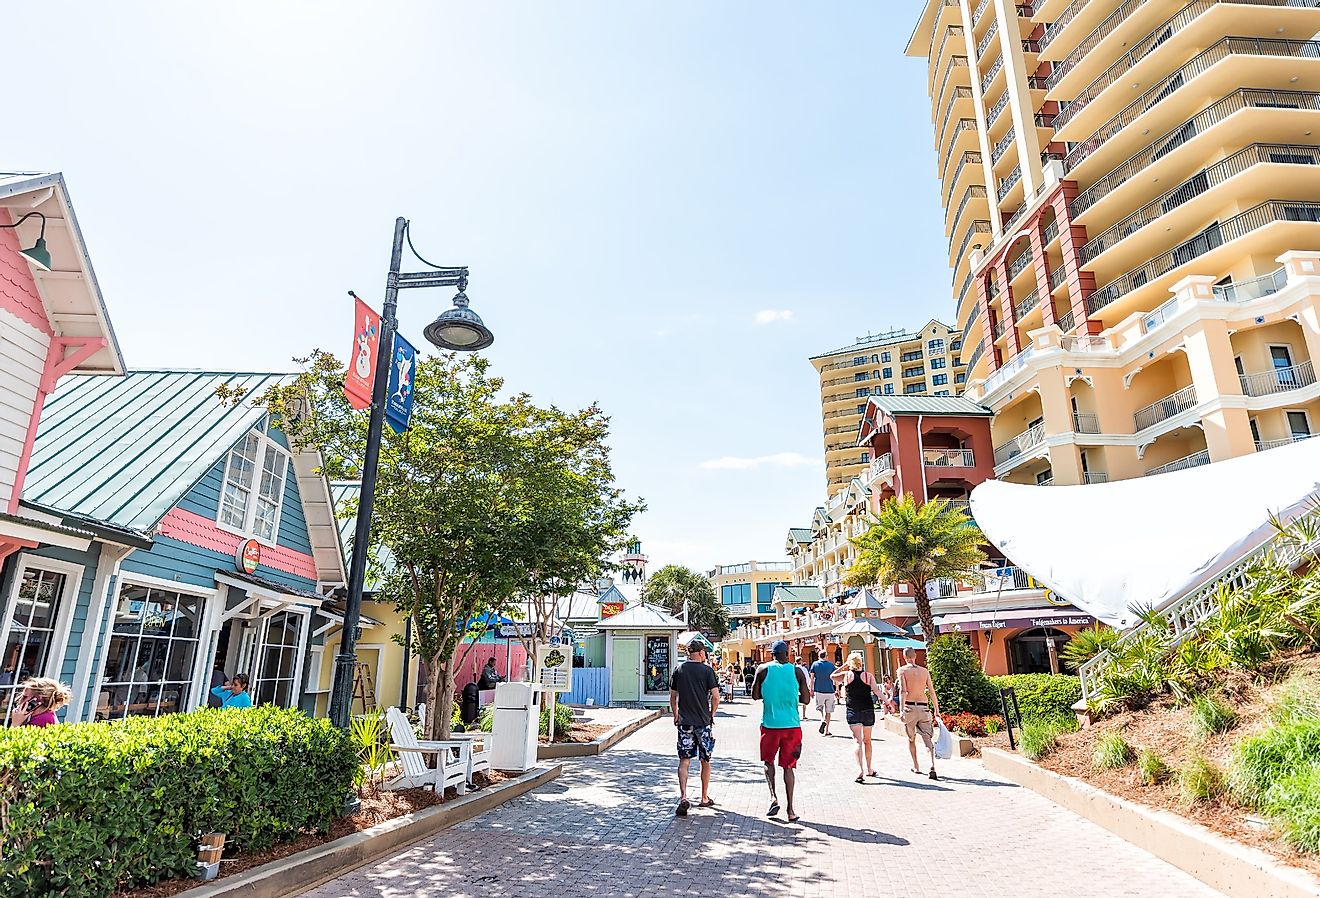 Pirate's Alley on Harbor Boardwalk during sunny day in Destin, Florida. Image credit Kristi Blokhin via Shutterstock